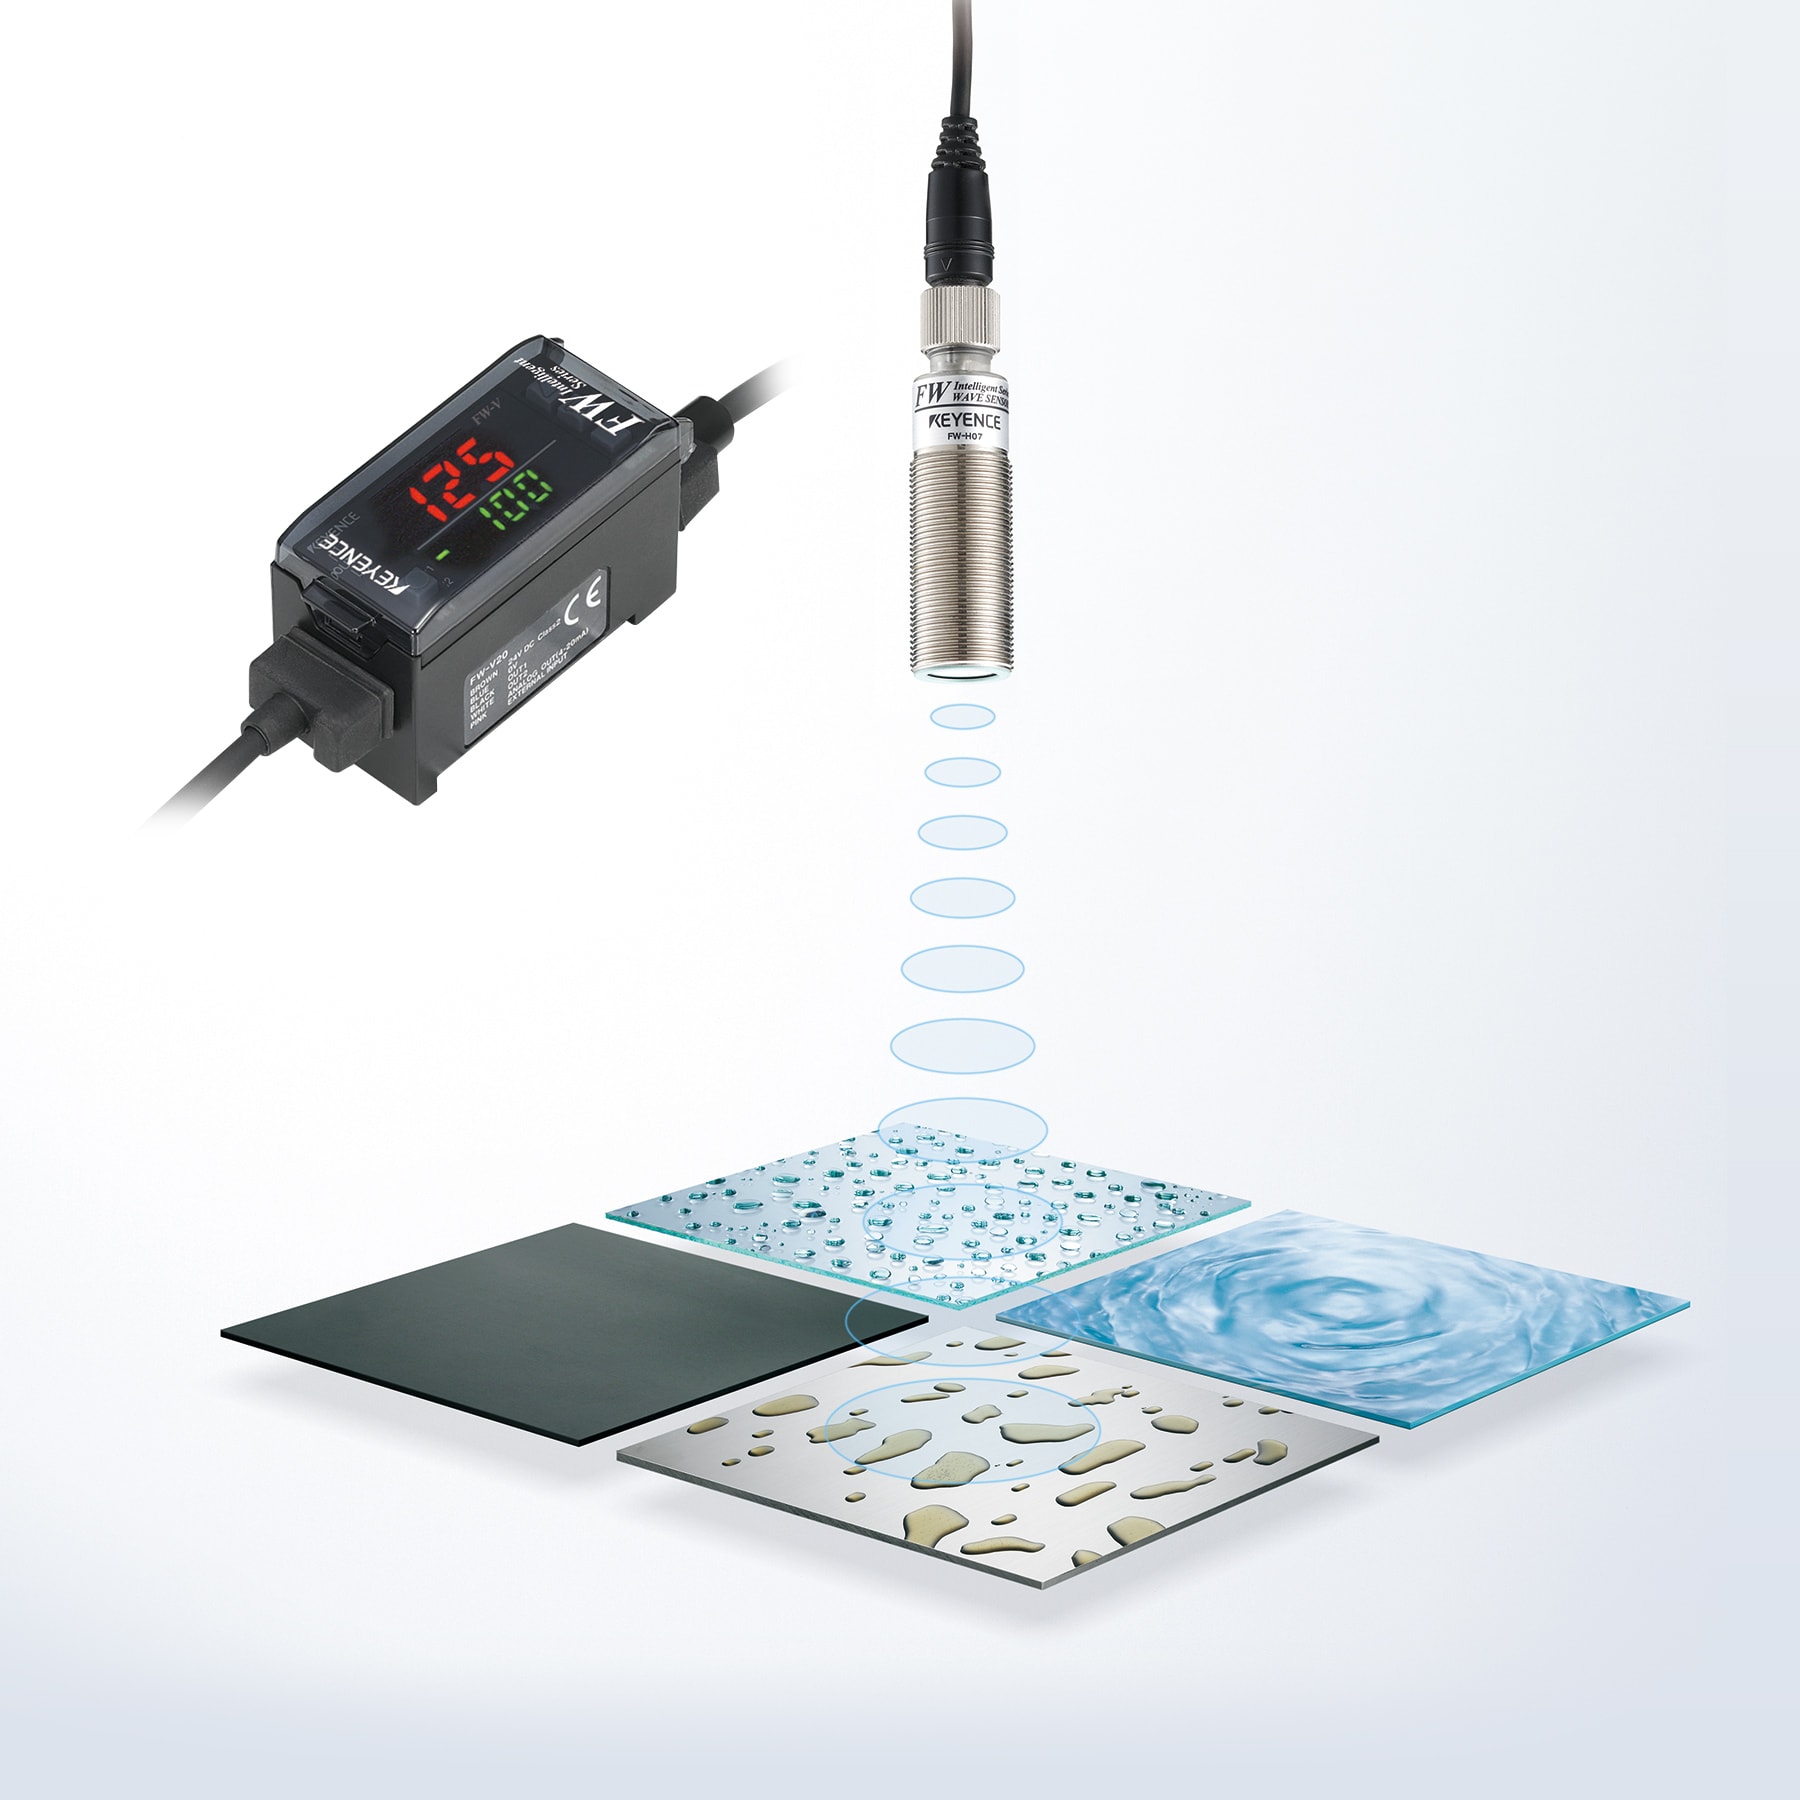 High Power Digital Ultrasonic Sensors - FW series | KEYENCE America